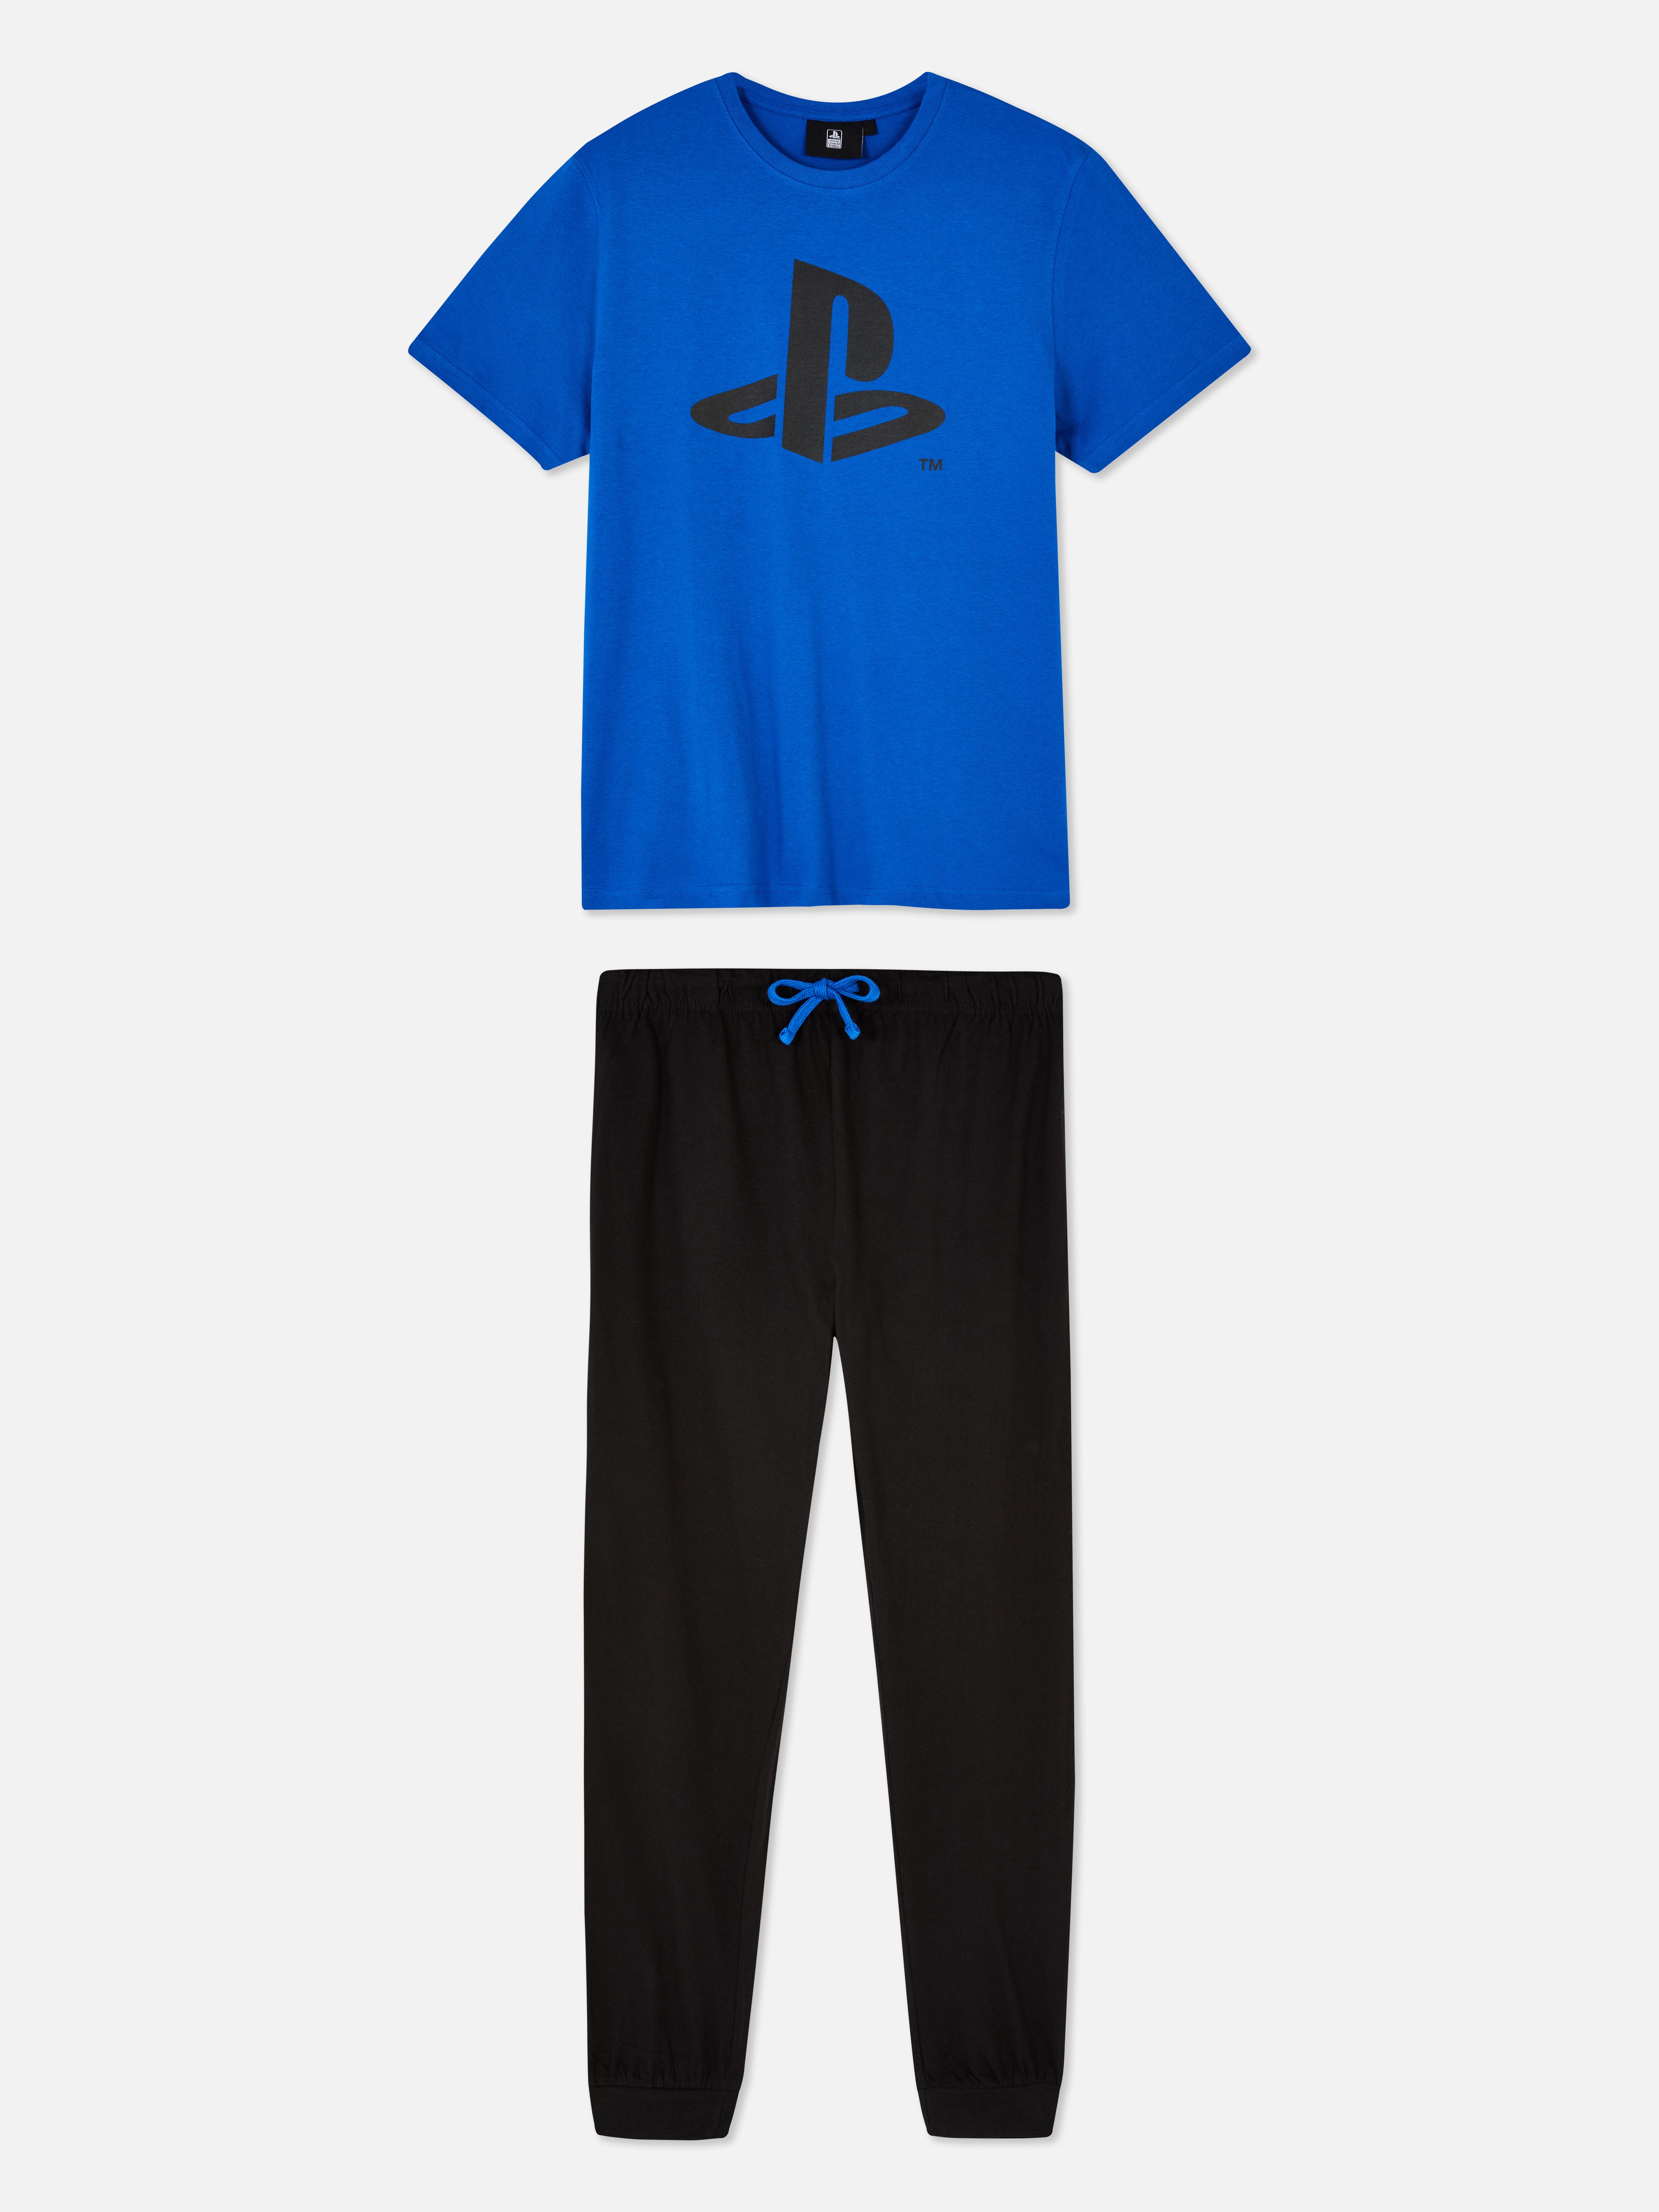 PlayStation Pyjama Set